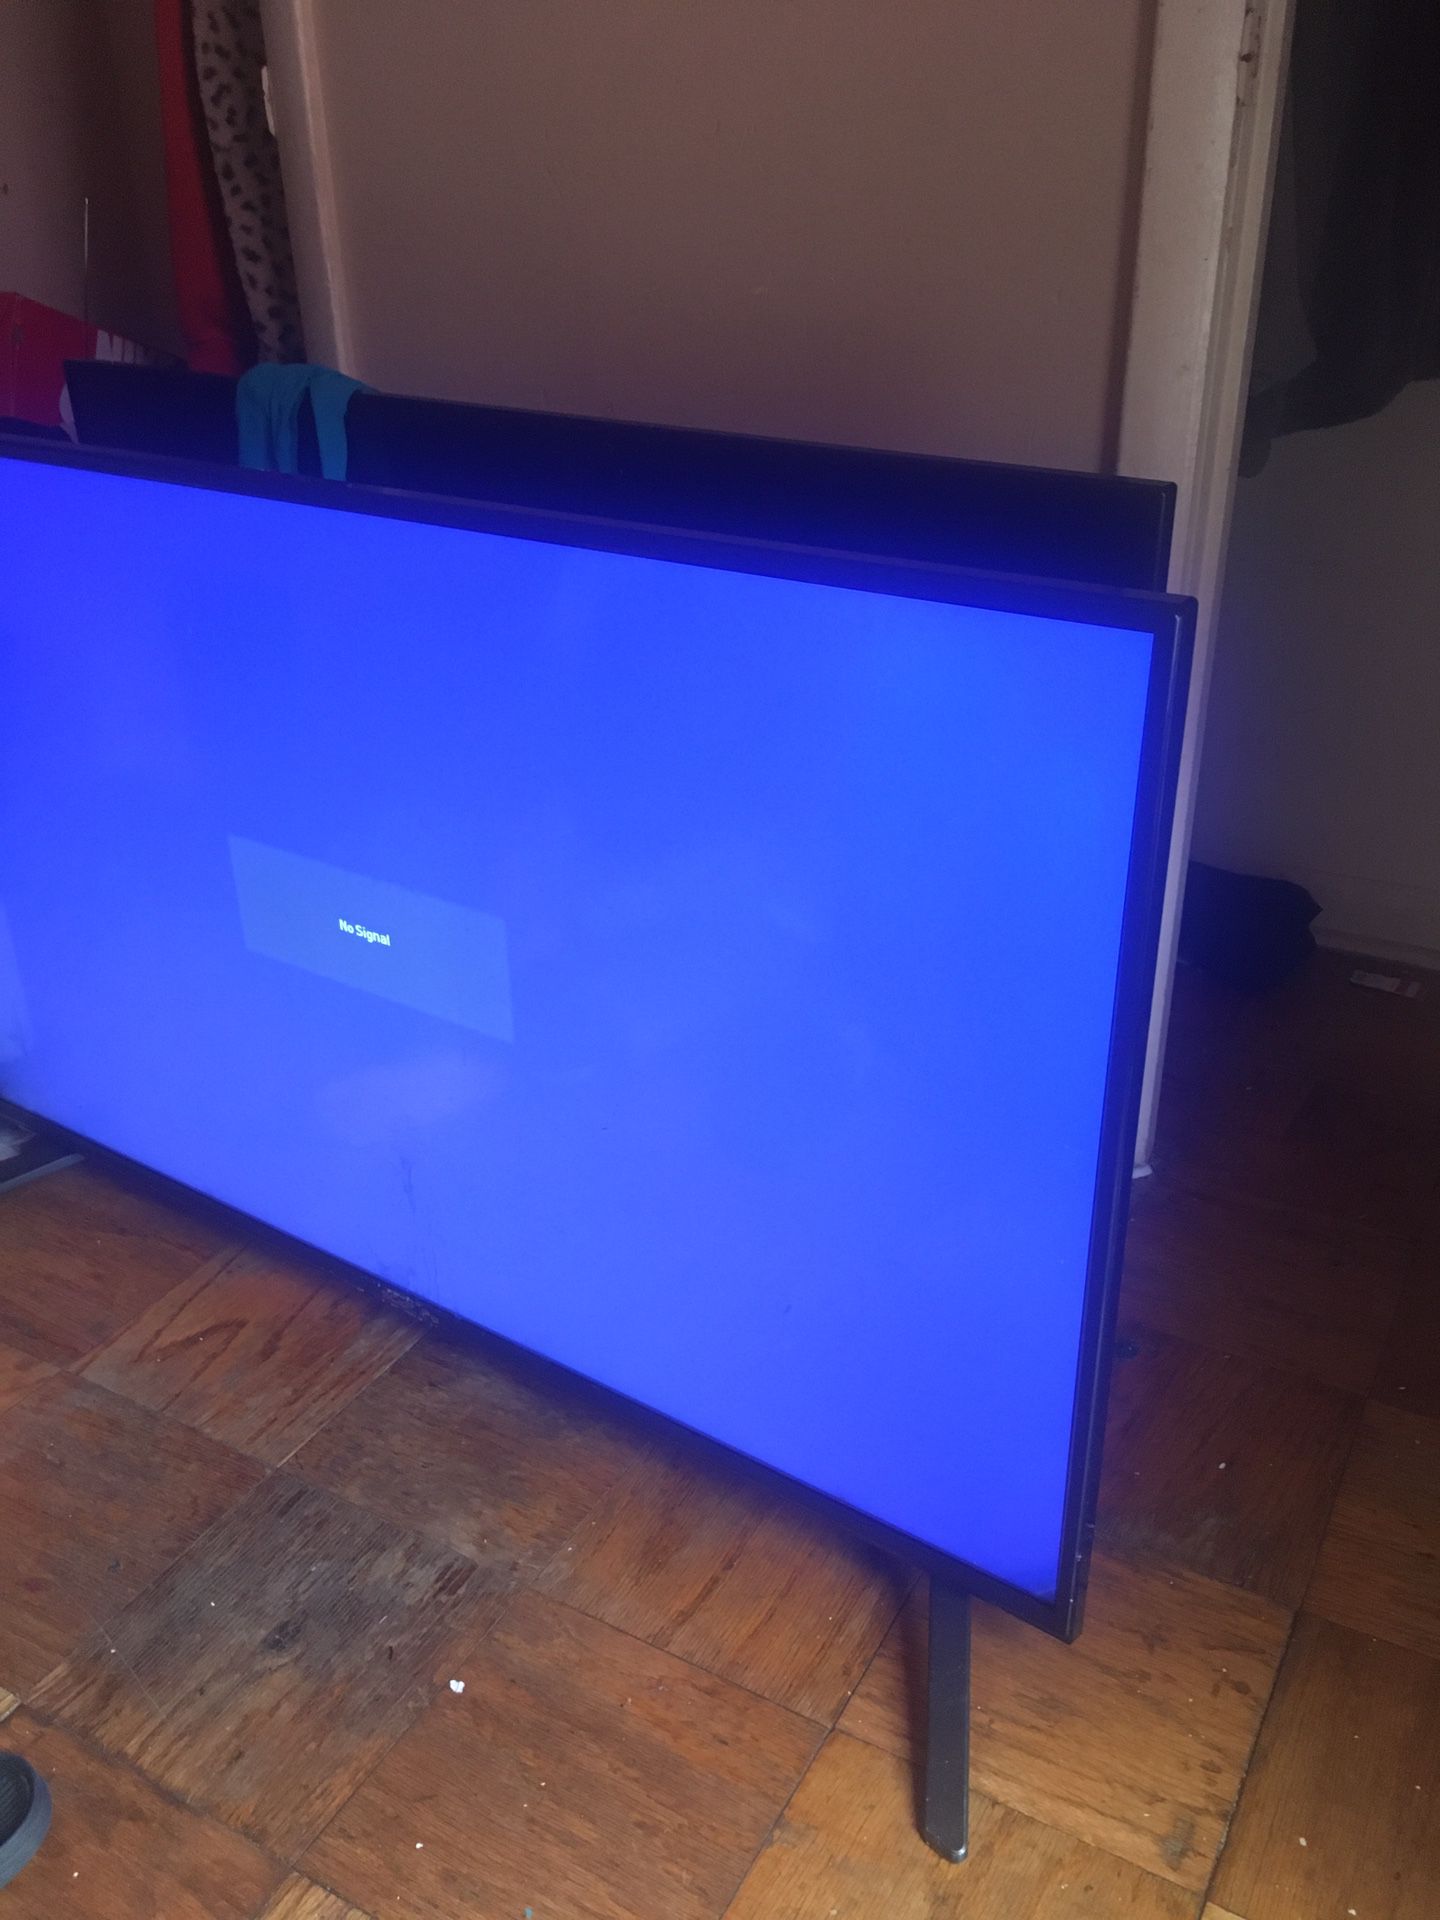 50’ inch sceptre 4K flatscreen tv